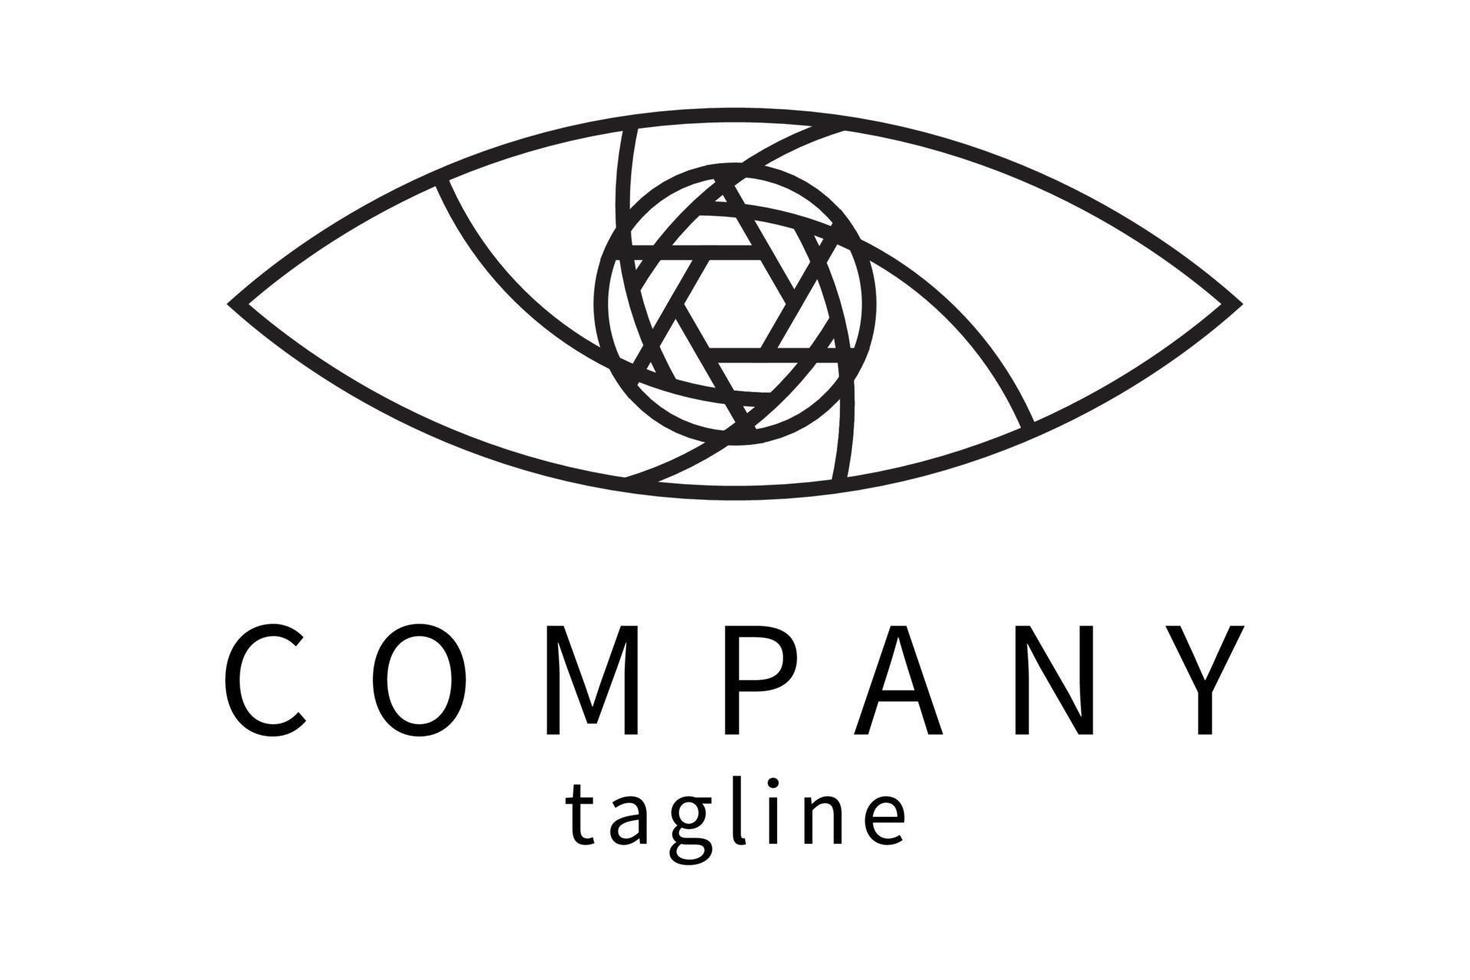 design de ícone de logotipo de olho vetor